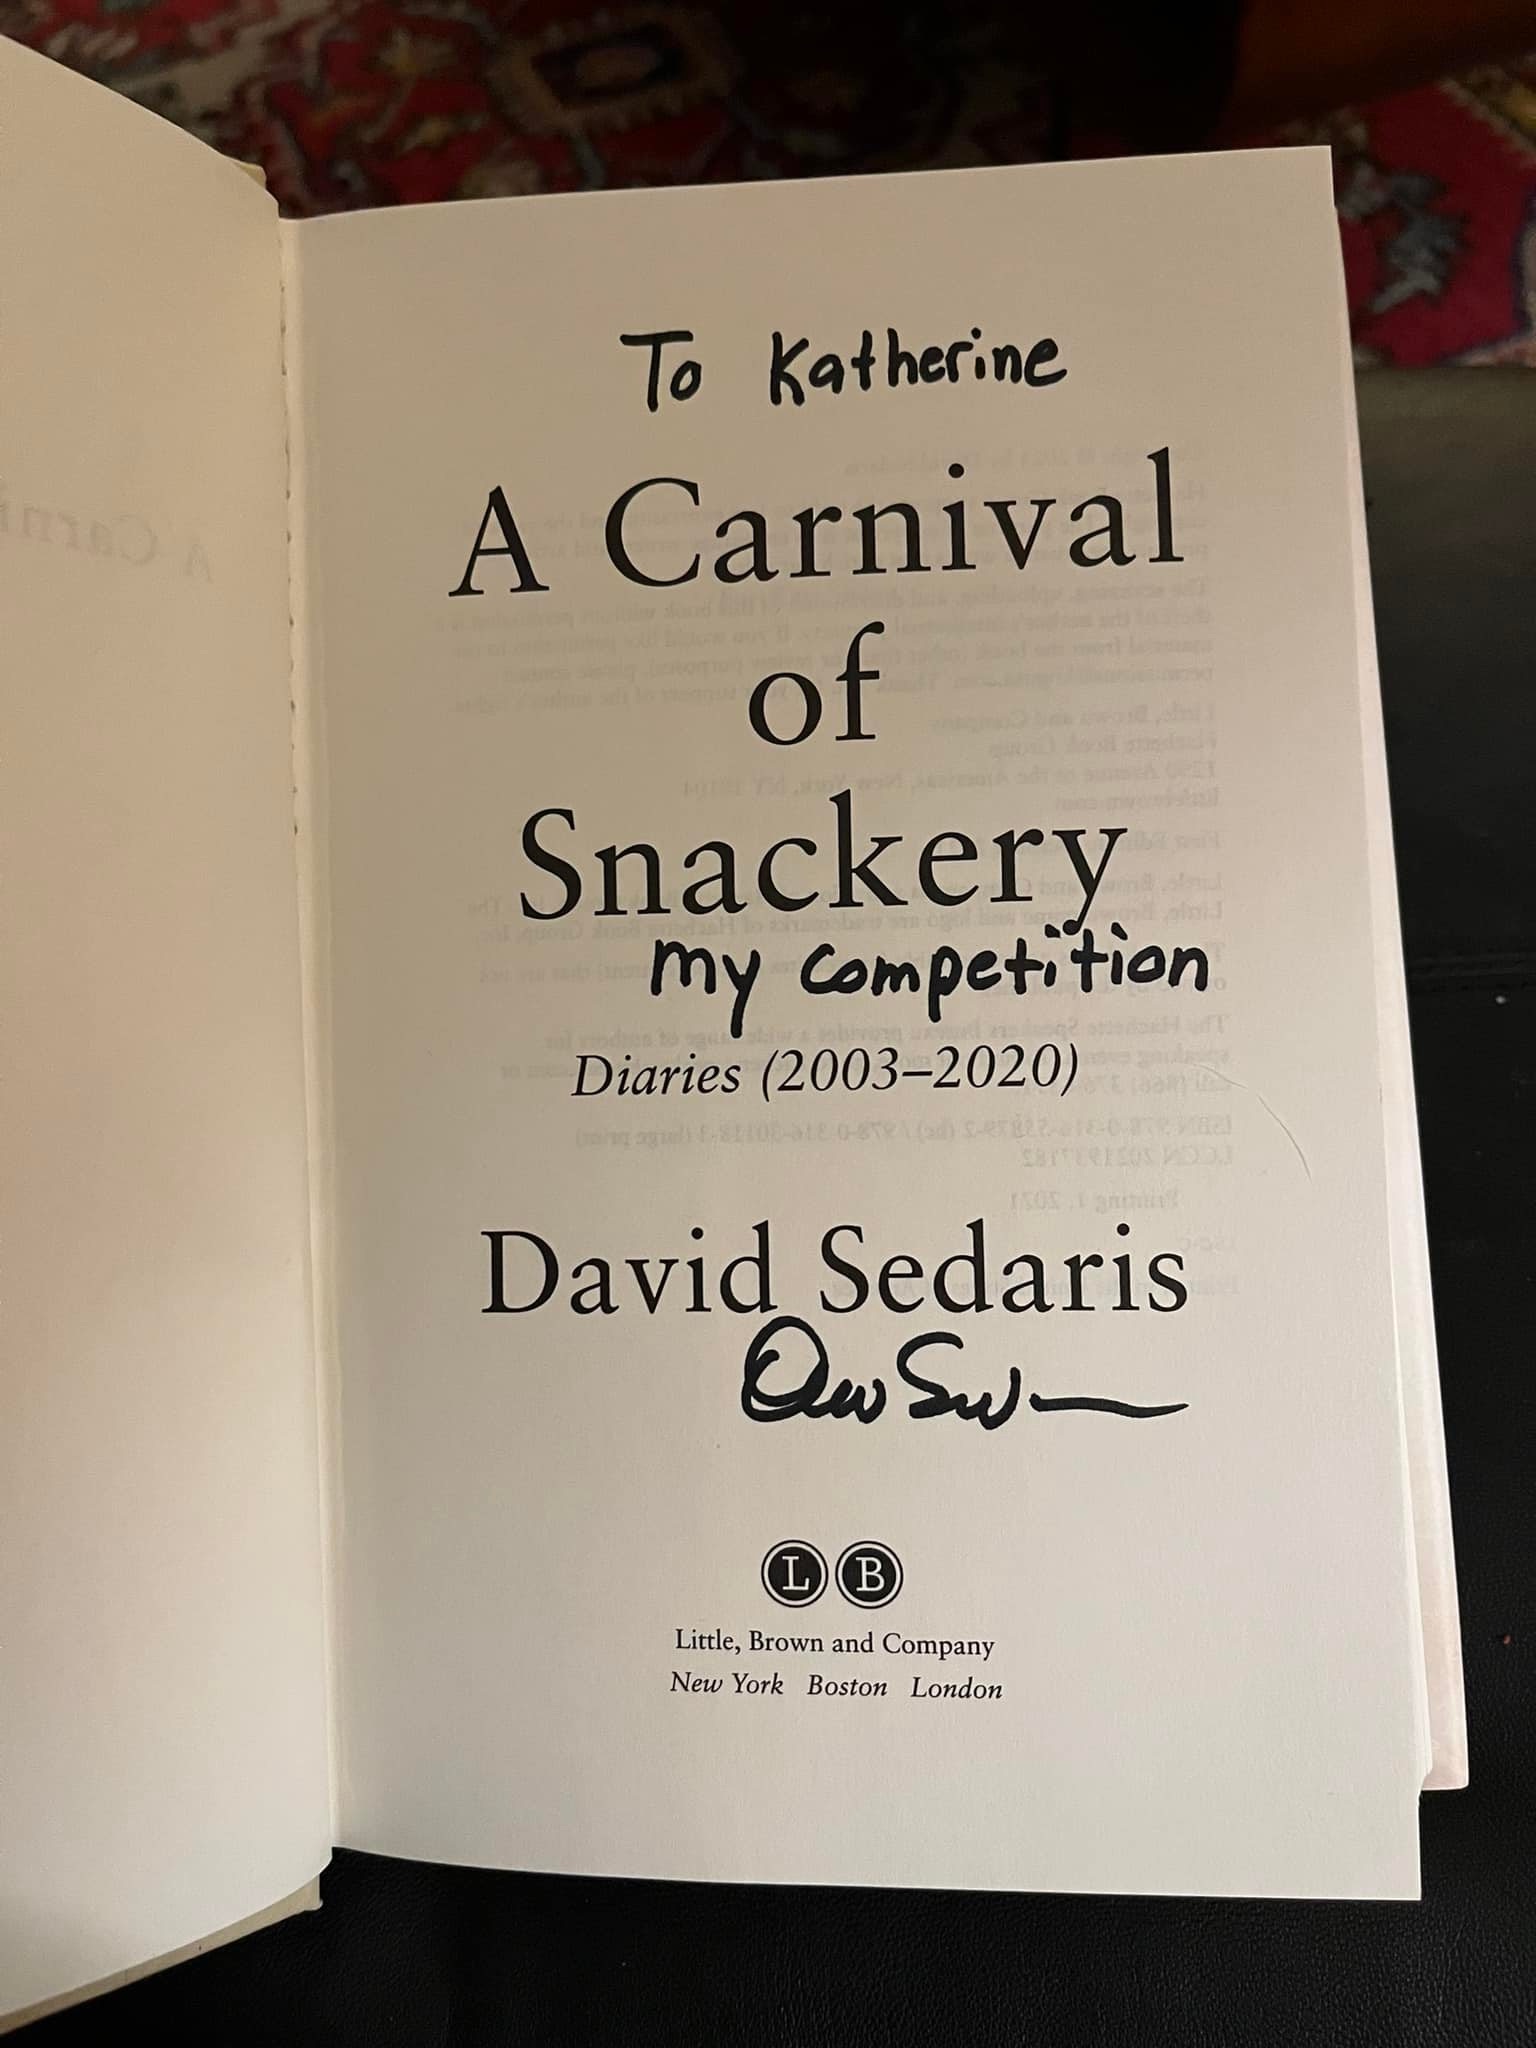 An Evening with David Sedaris – My Competition